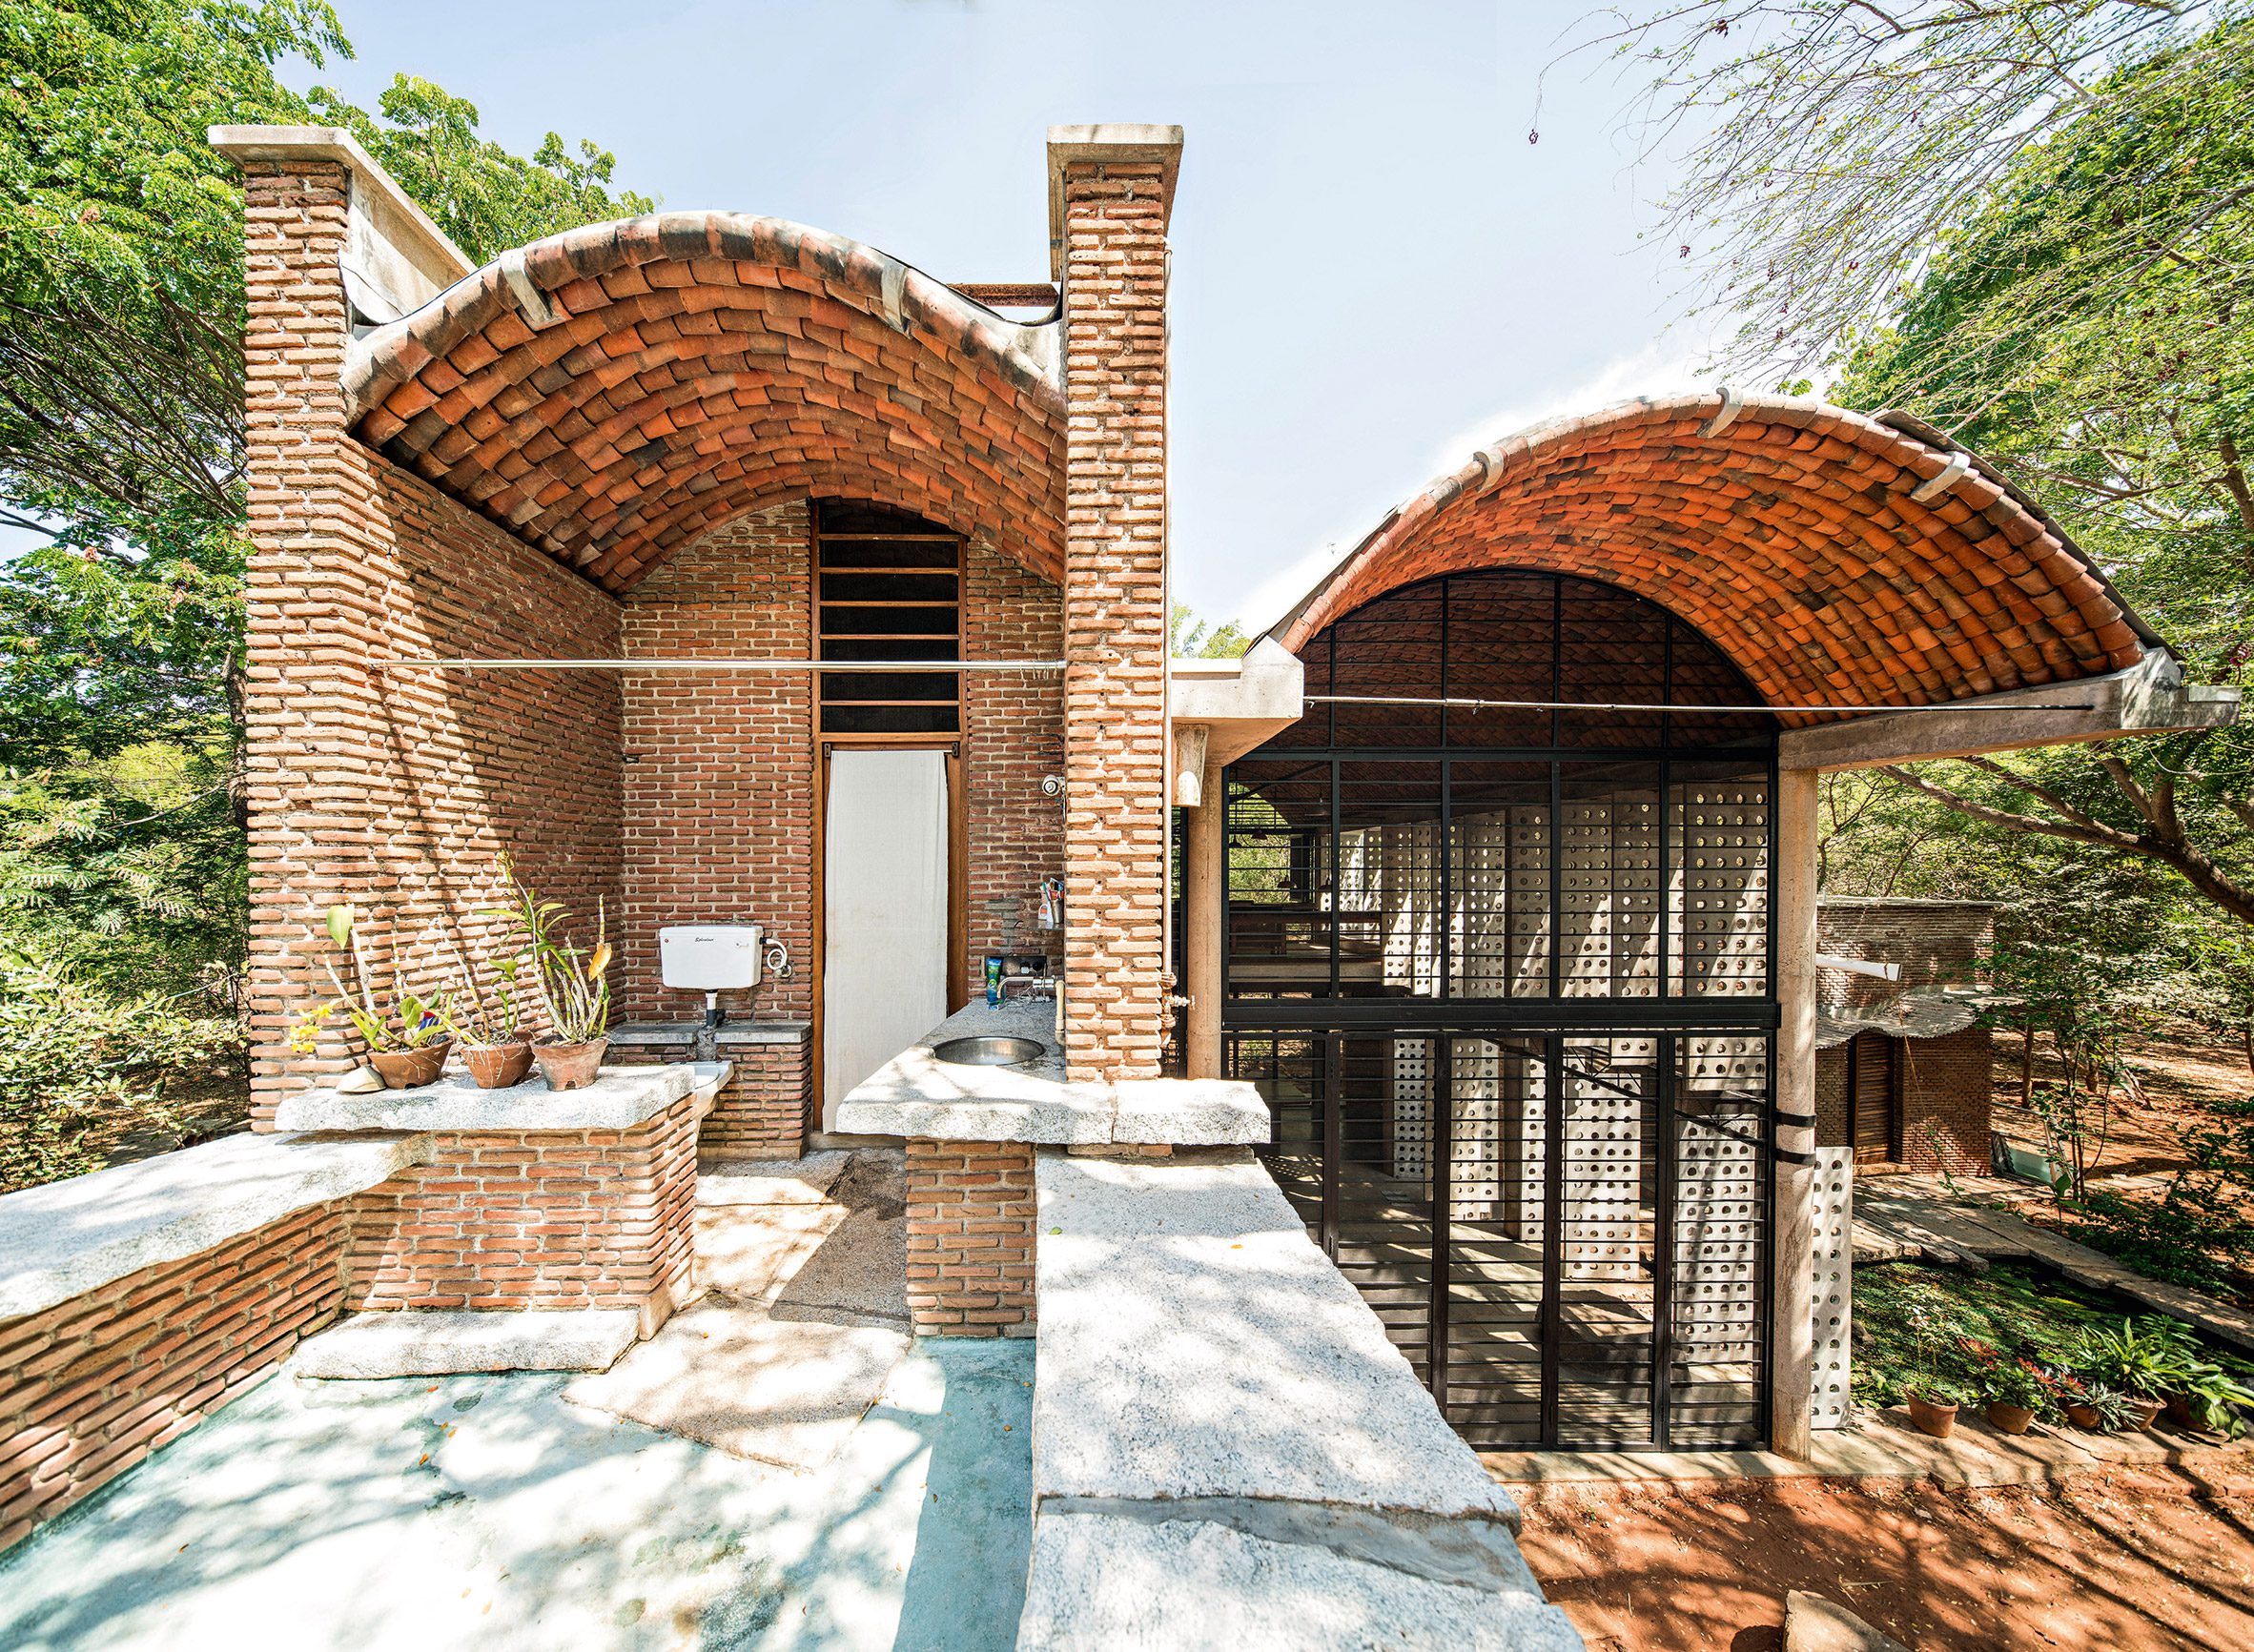 Anupama Kundoo built a brick building in India